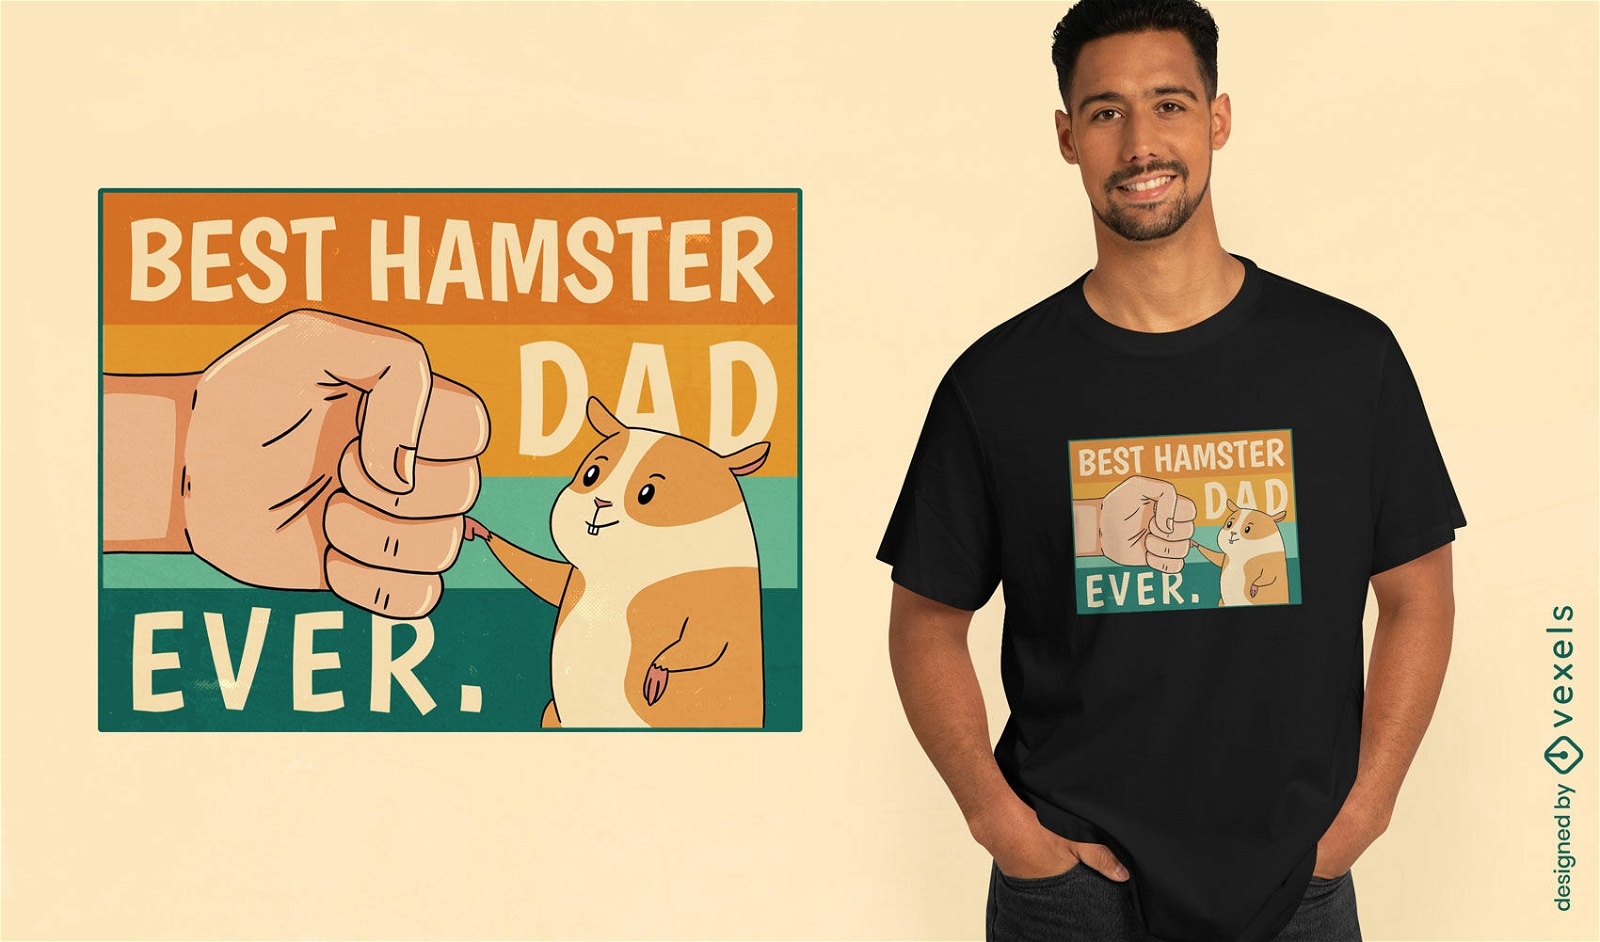 Hamster pet quote t-shirt design